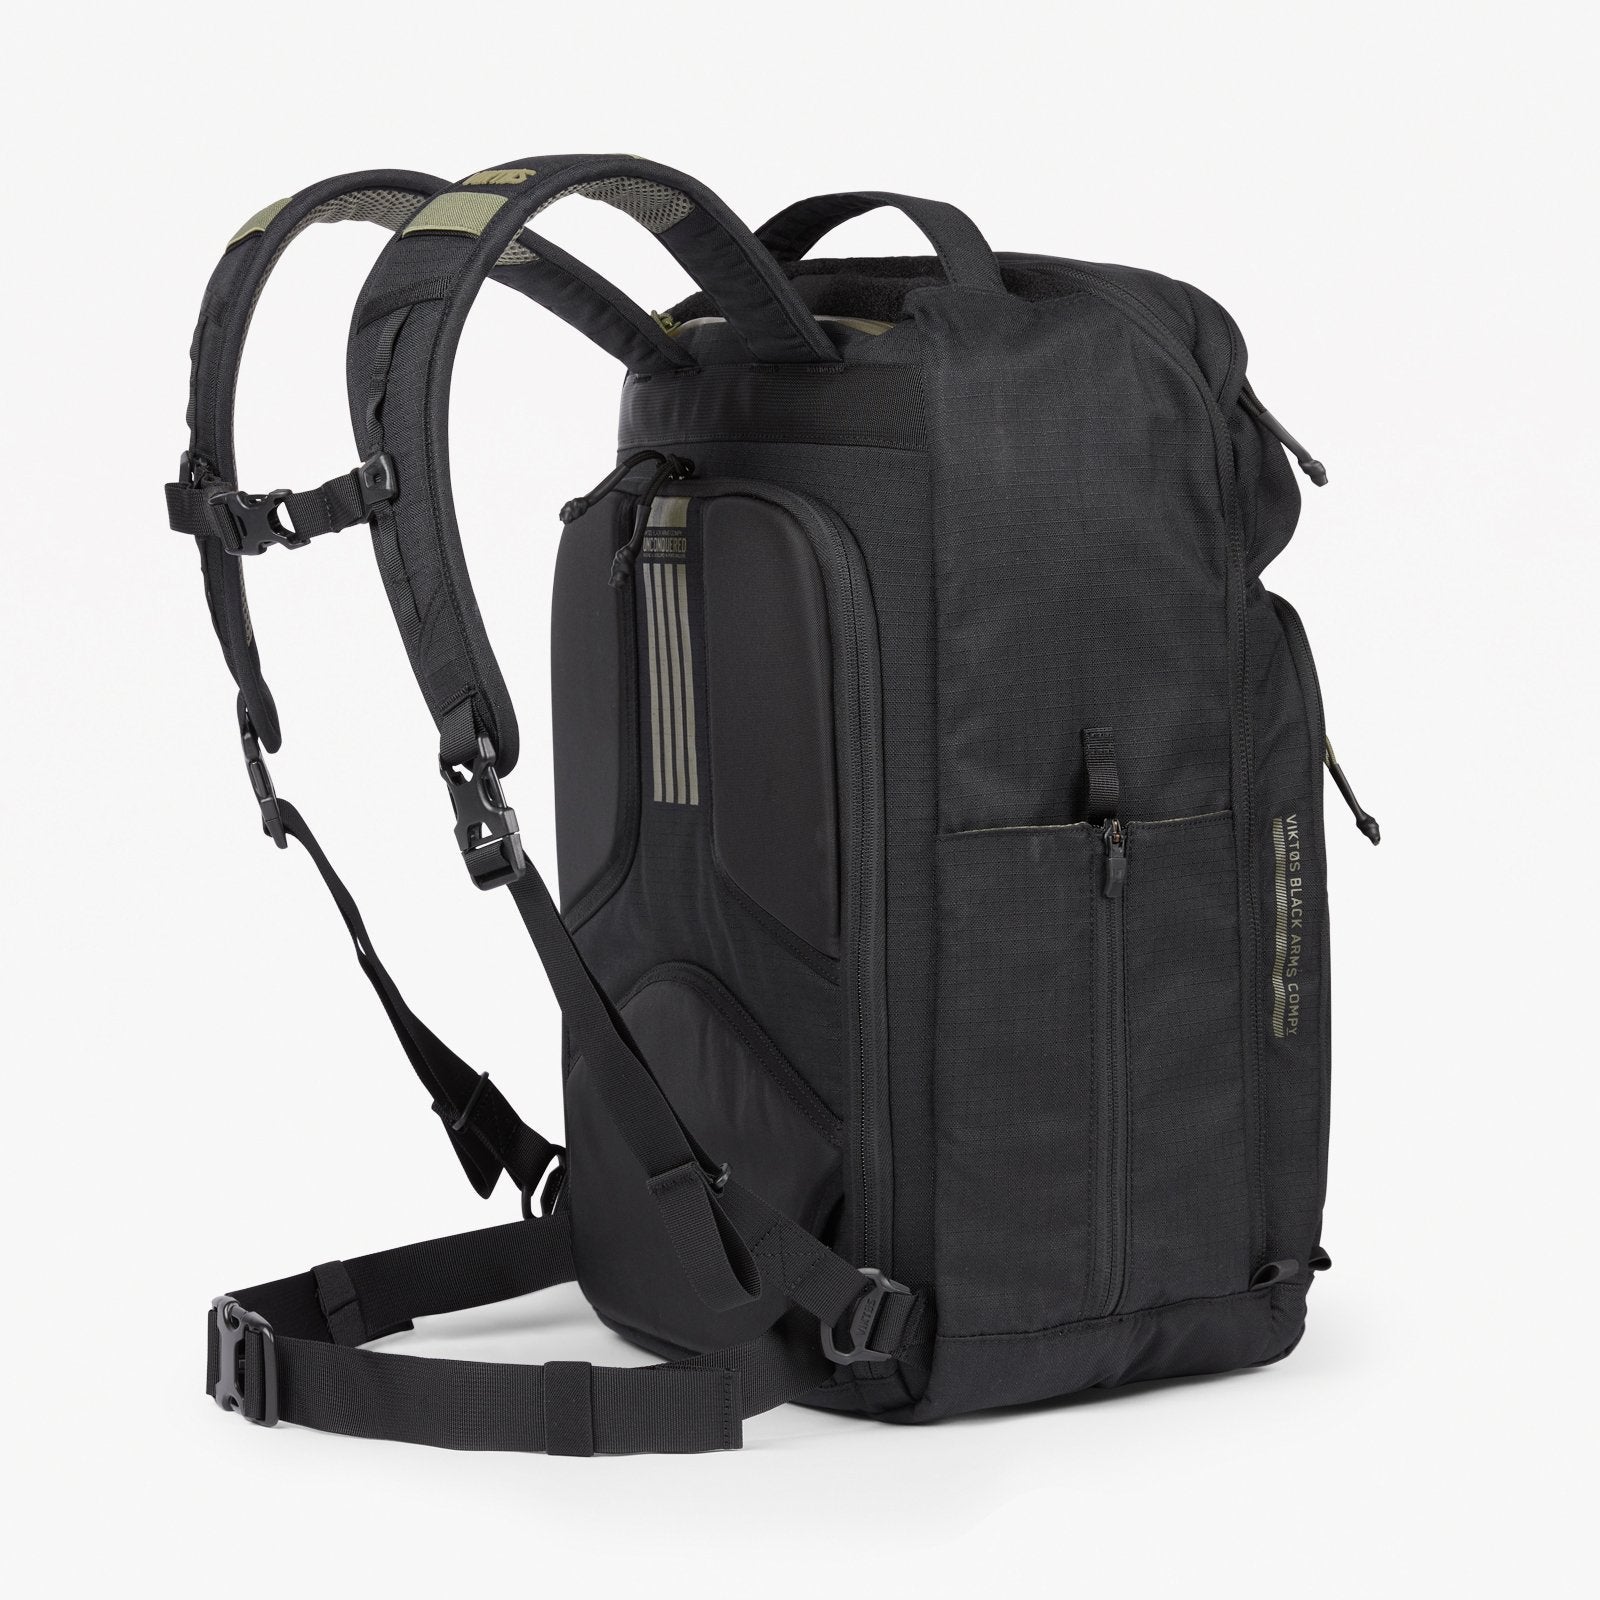 VIKTOS Perimeter 40L Backpack Nightfjall Bags, Packs and Cases VIKTOS Tactical Gear Supplier Tactical Distributors Australia